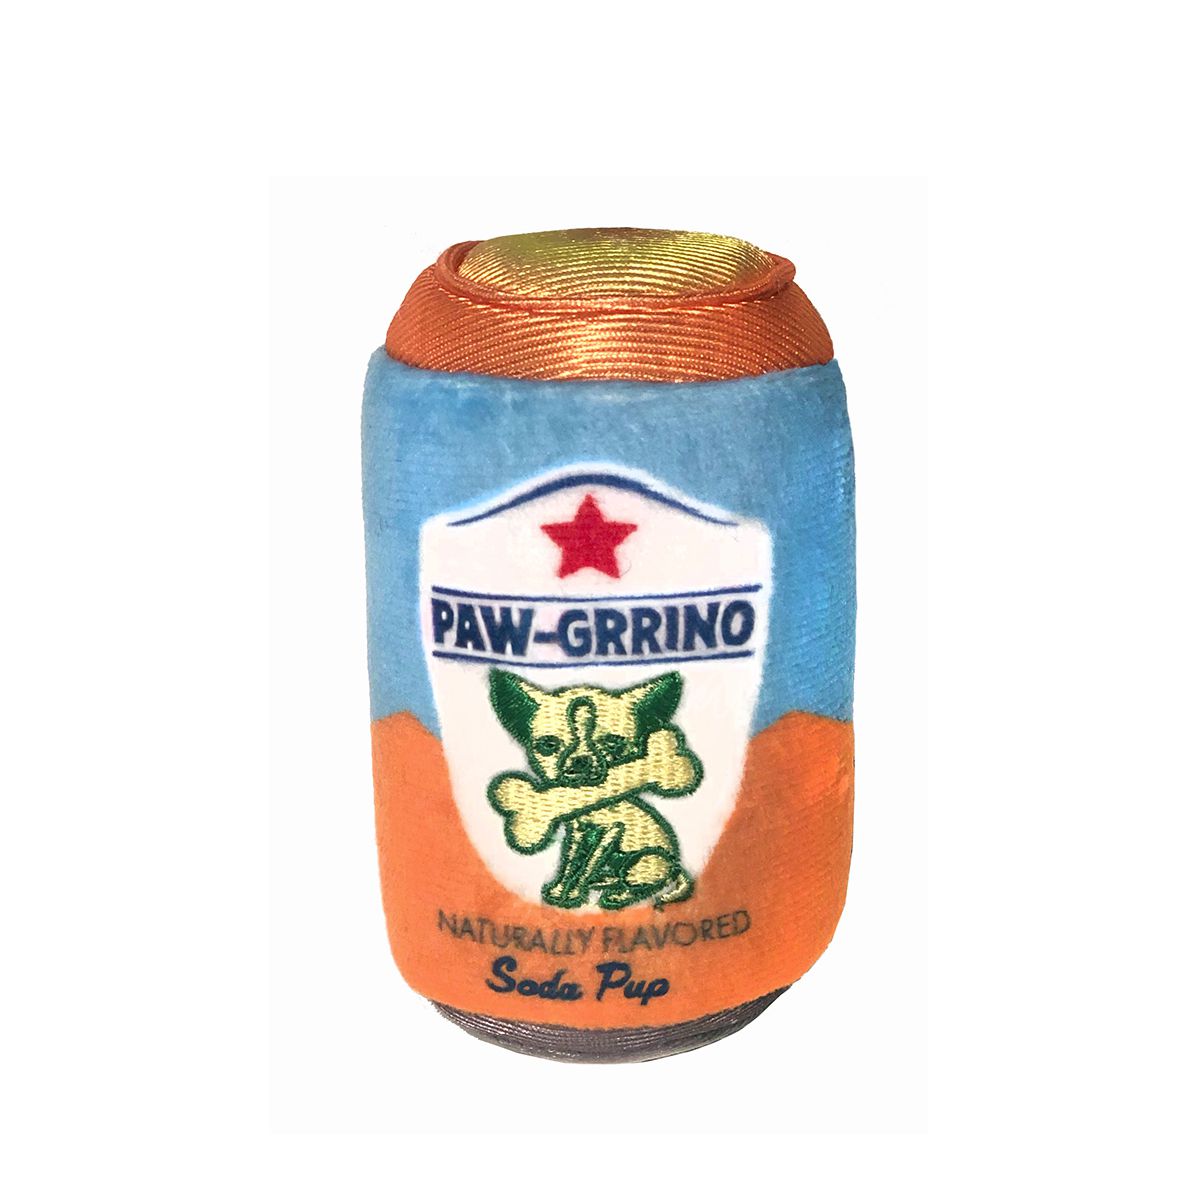 Pawgrrino Naturally Flavored Soda Pup | Pawlicious & Company